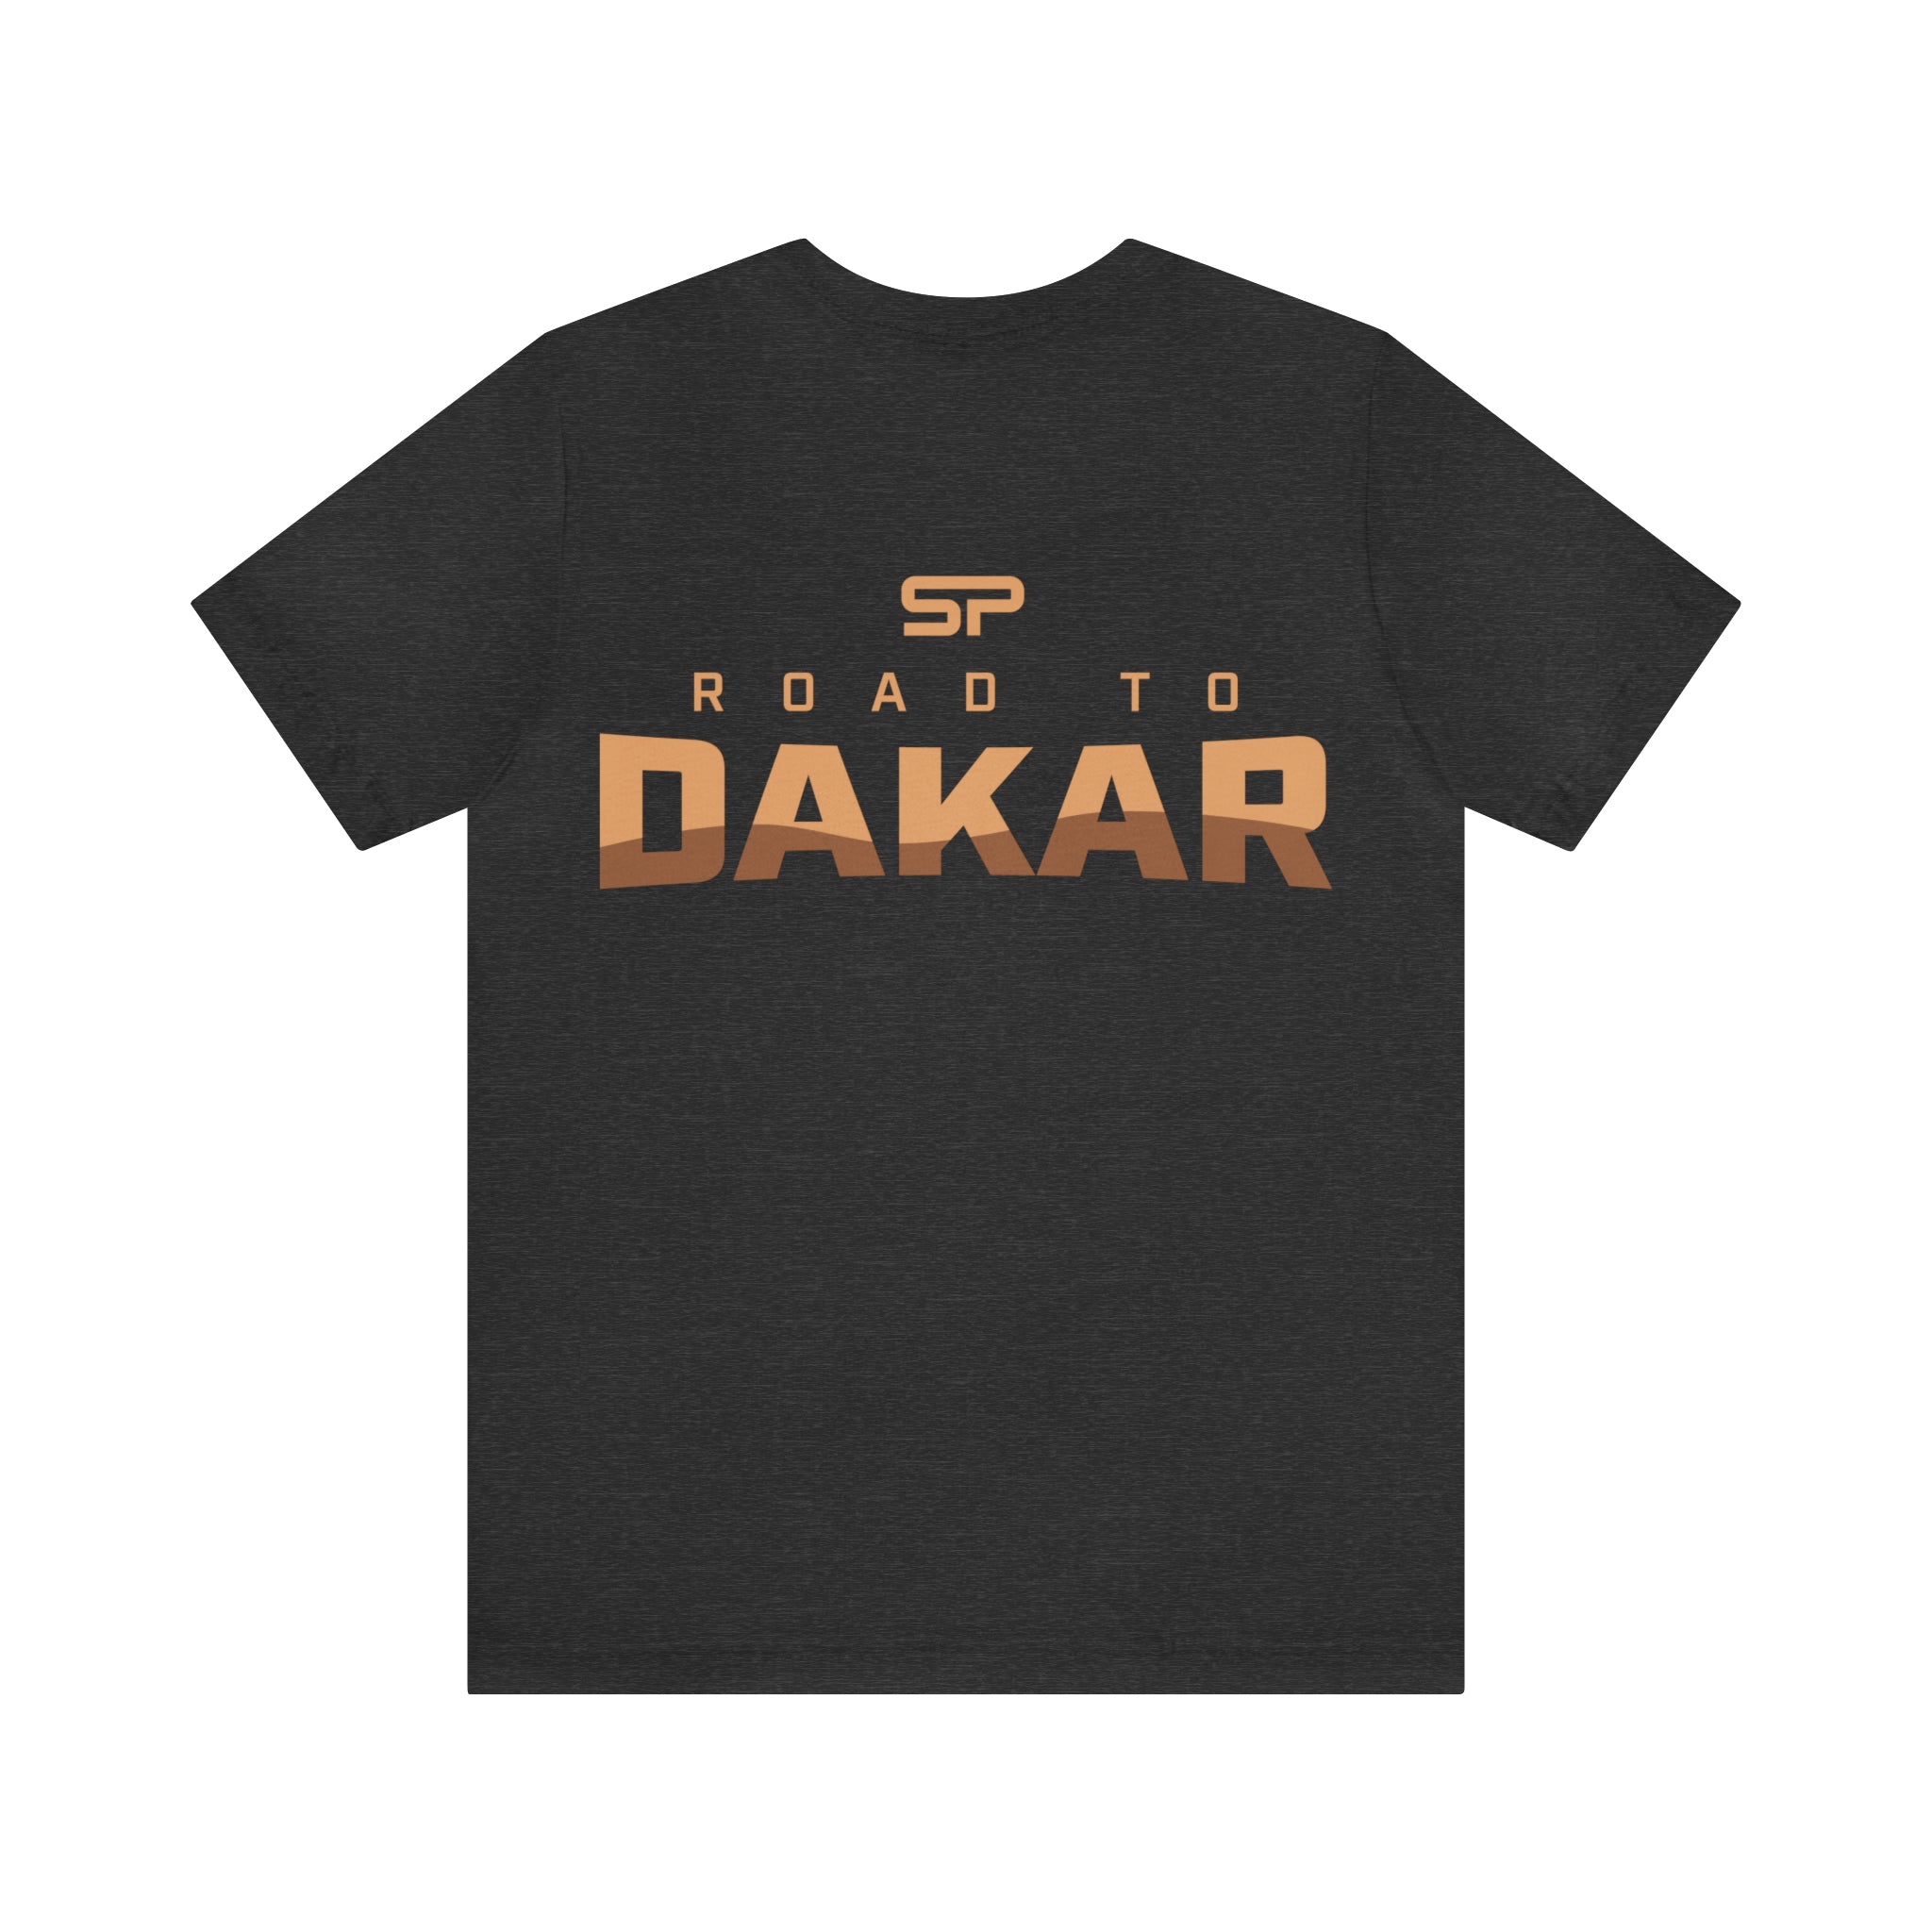 Dakar Short Sleeve Tee